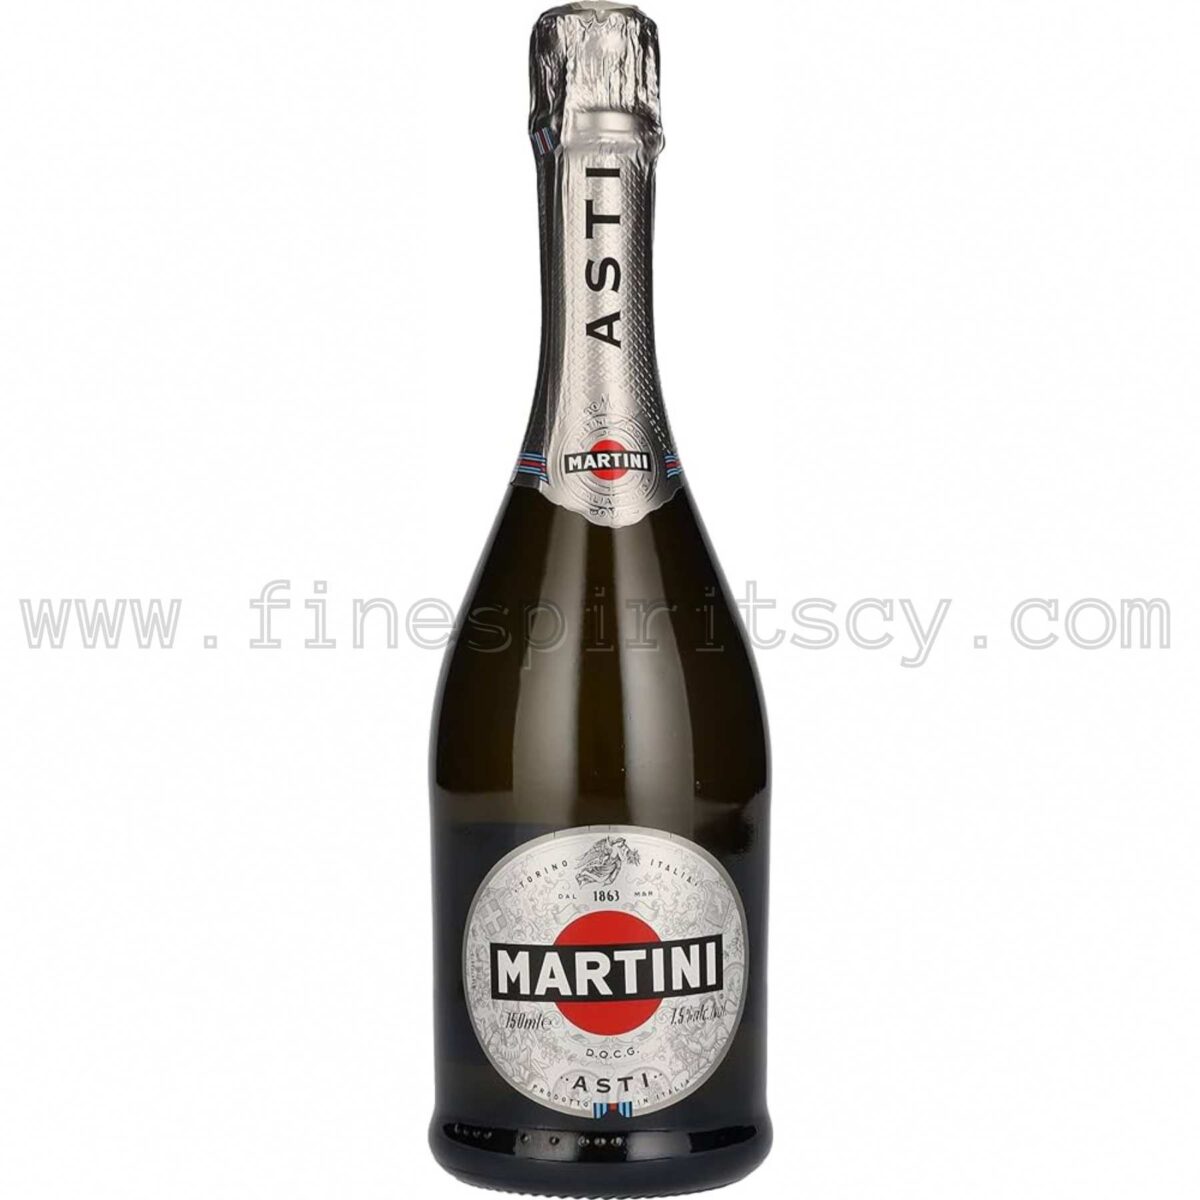 Martini Asti CY 75cl 0.75L Cyprus Wine Price Online Sparkling Order Buy 750ml